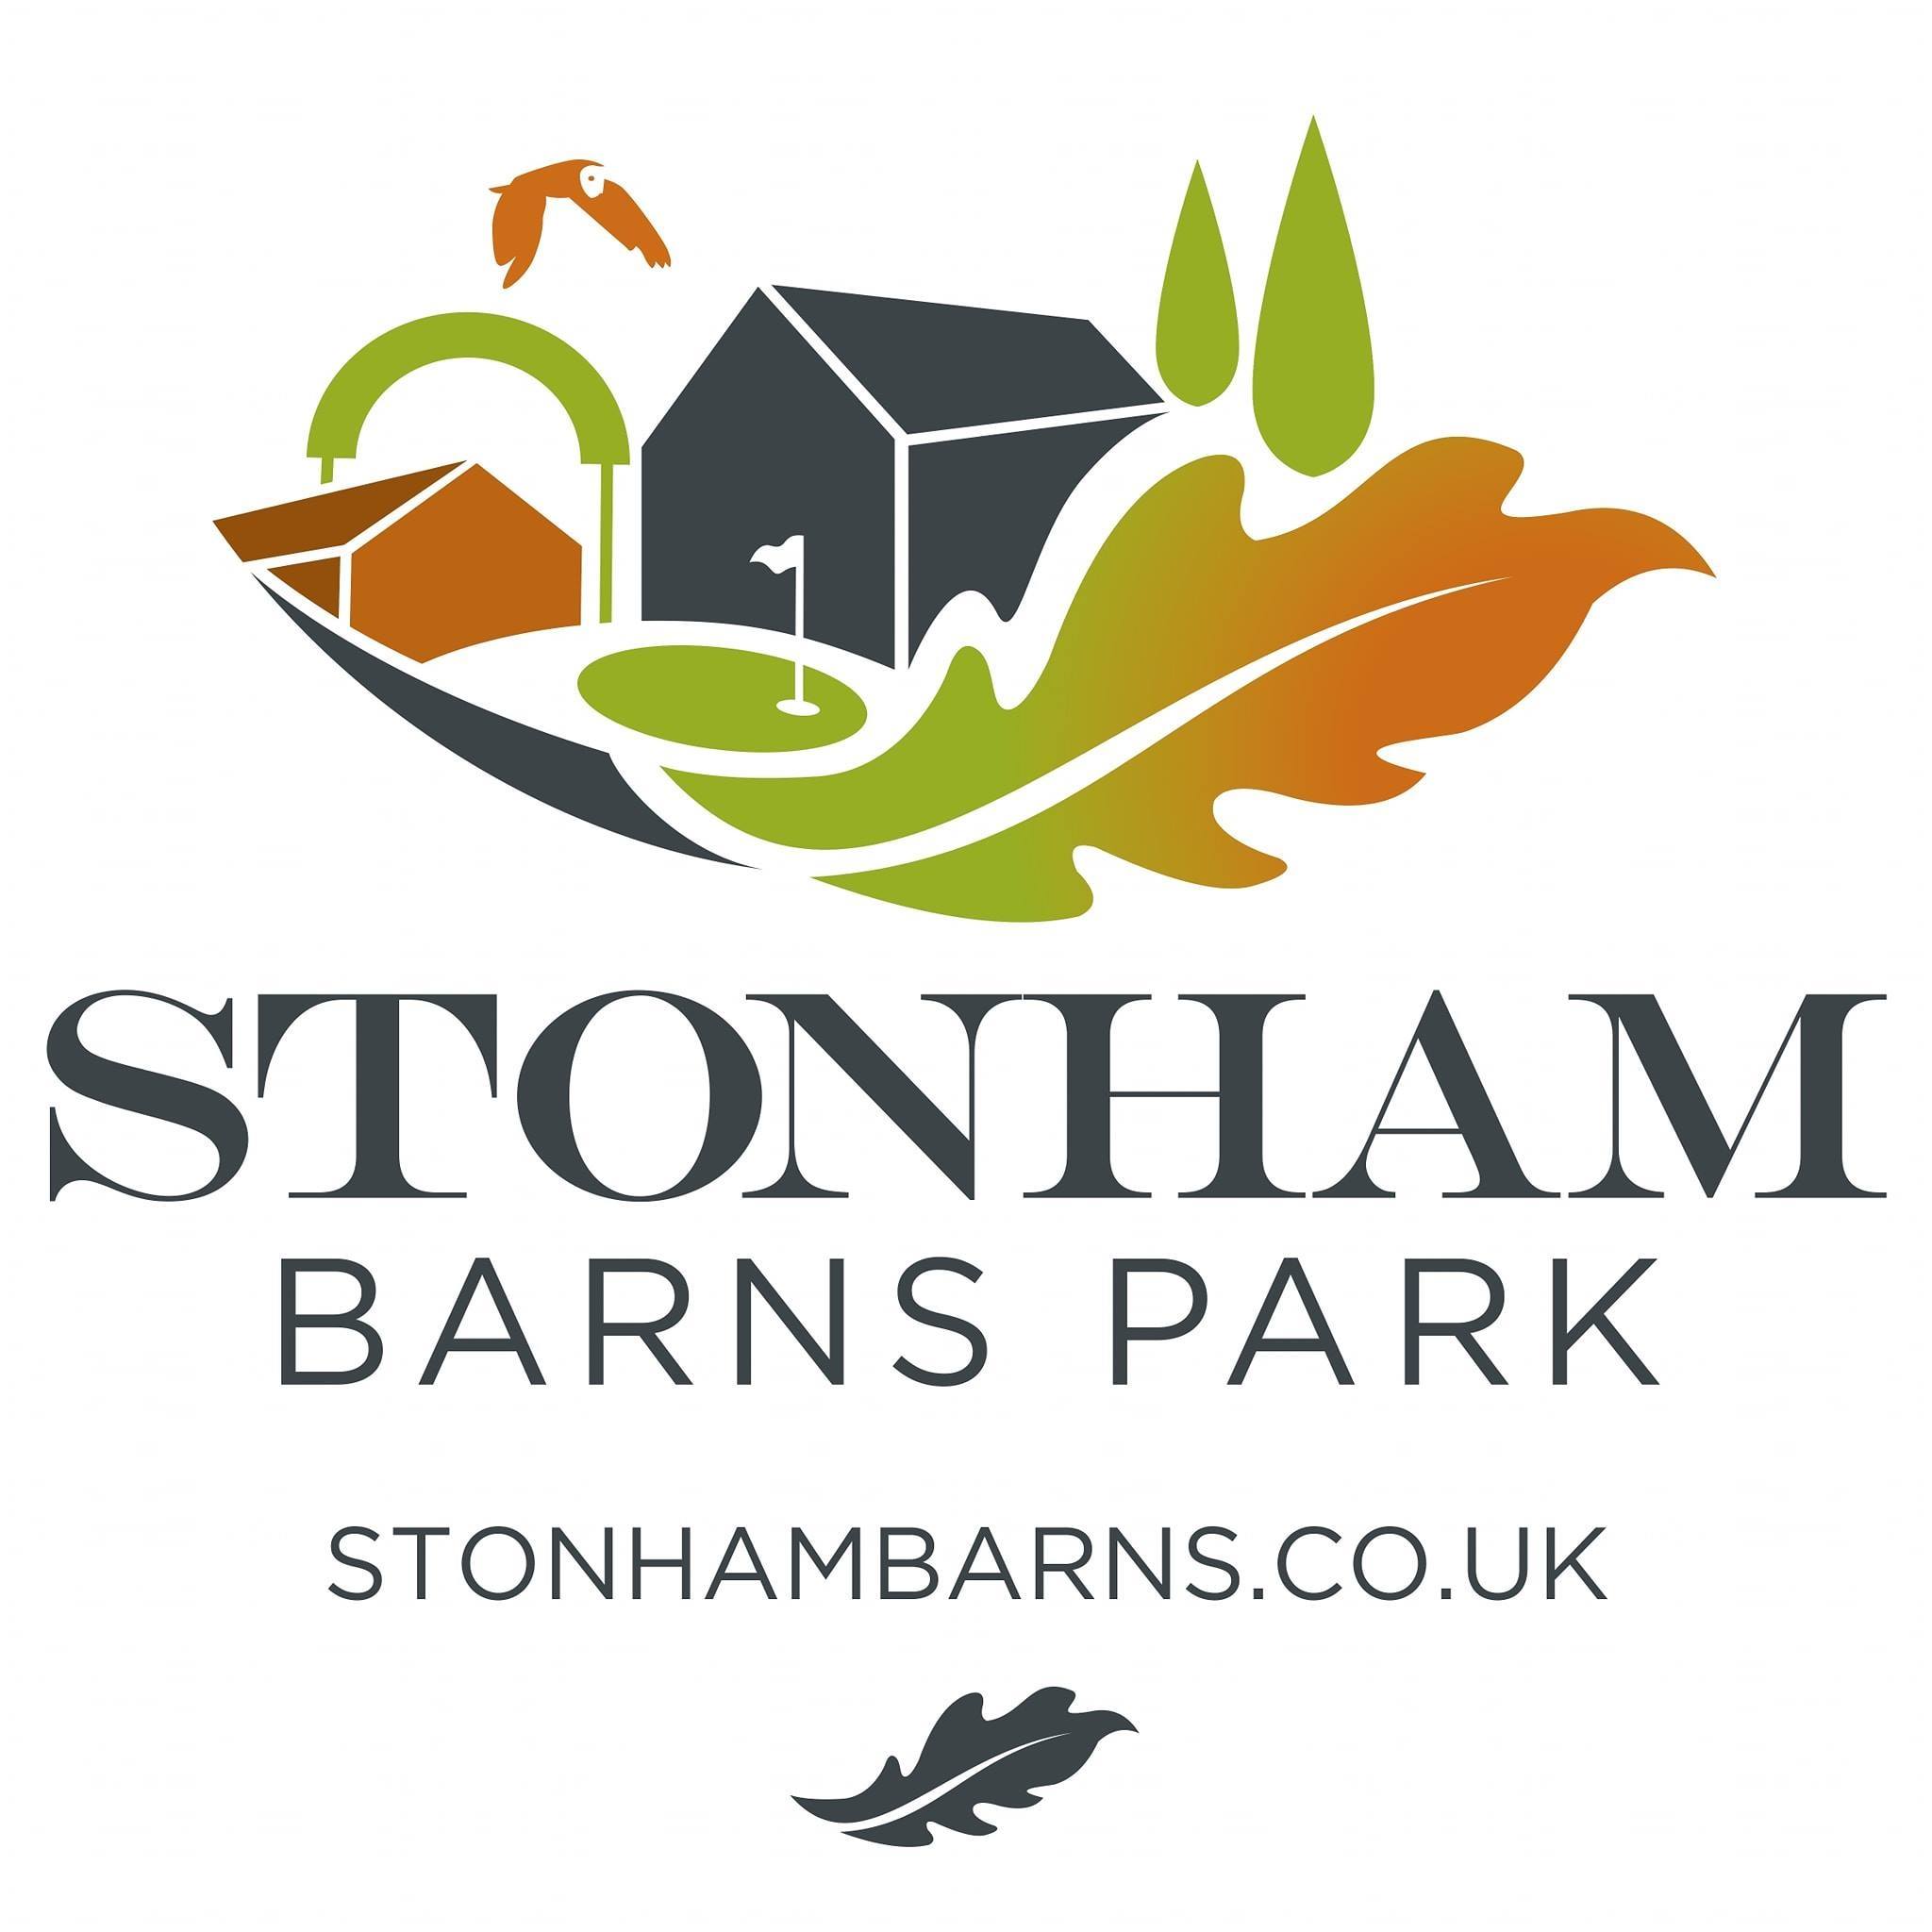 Stonham Barns Park - Food, Retail, Leisure, Events